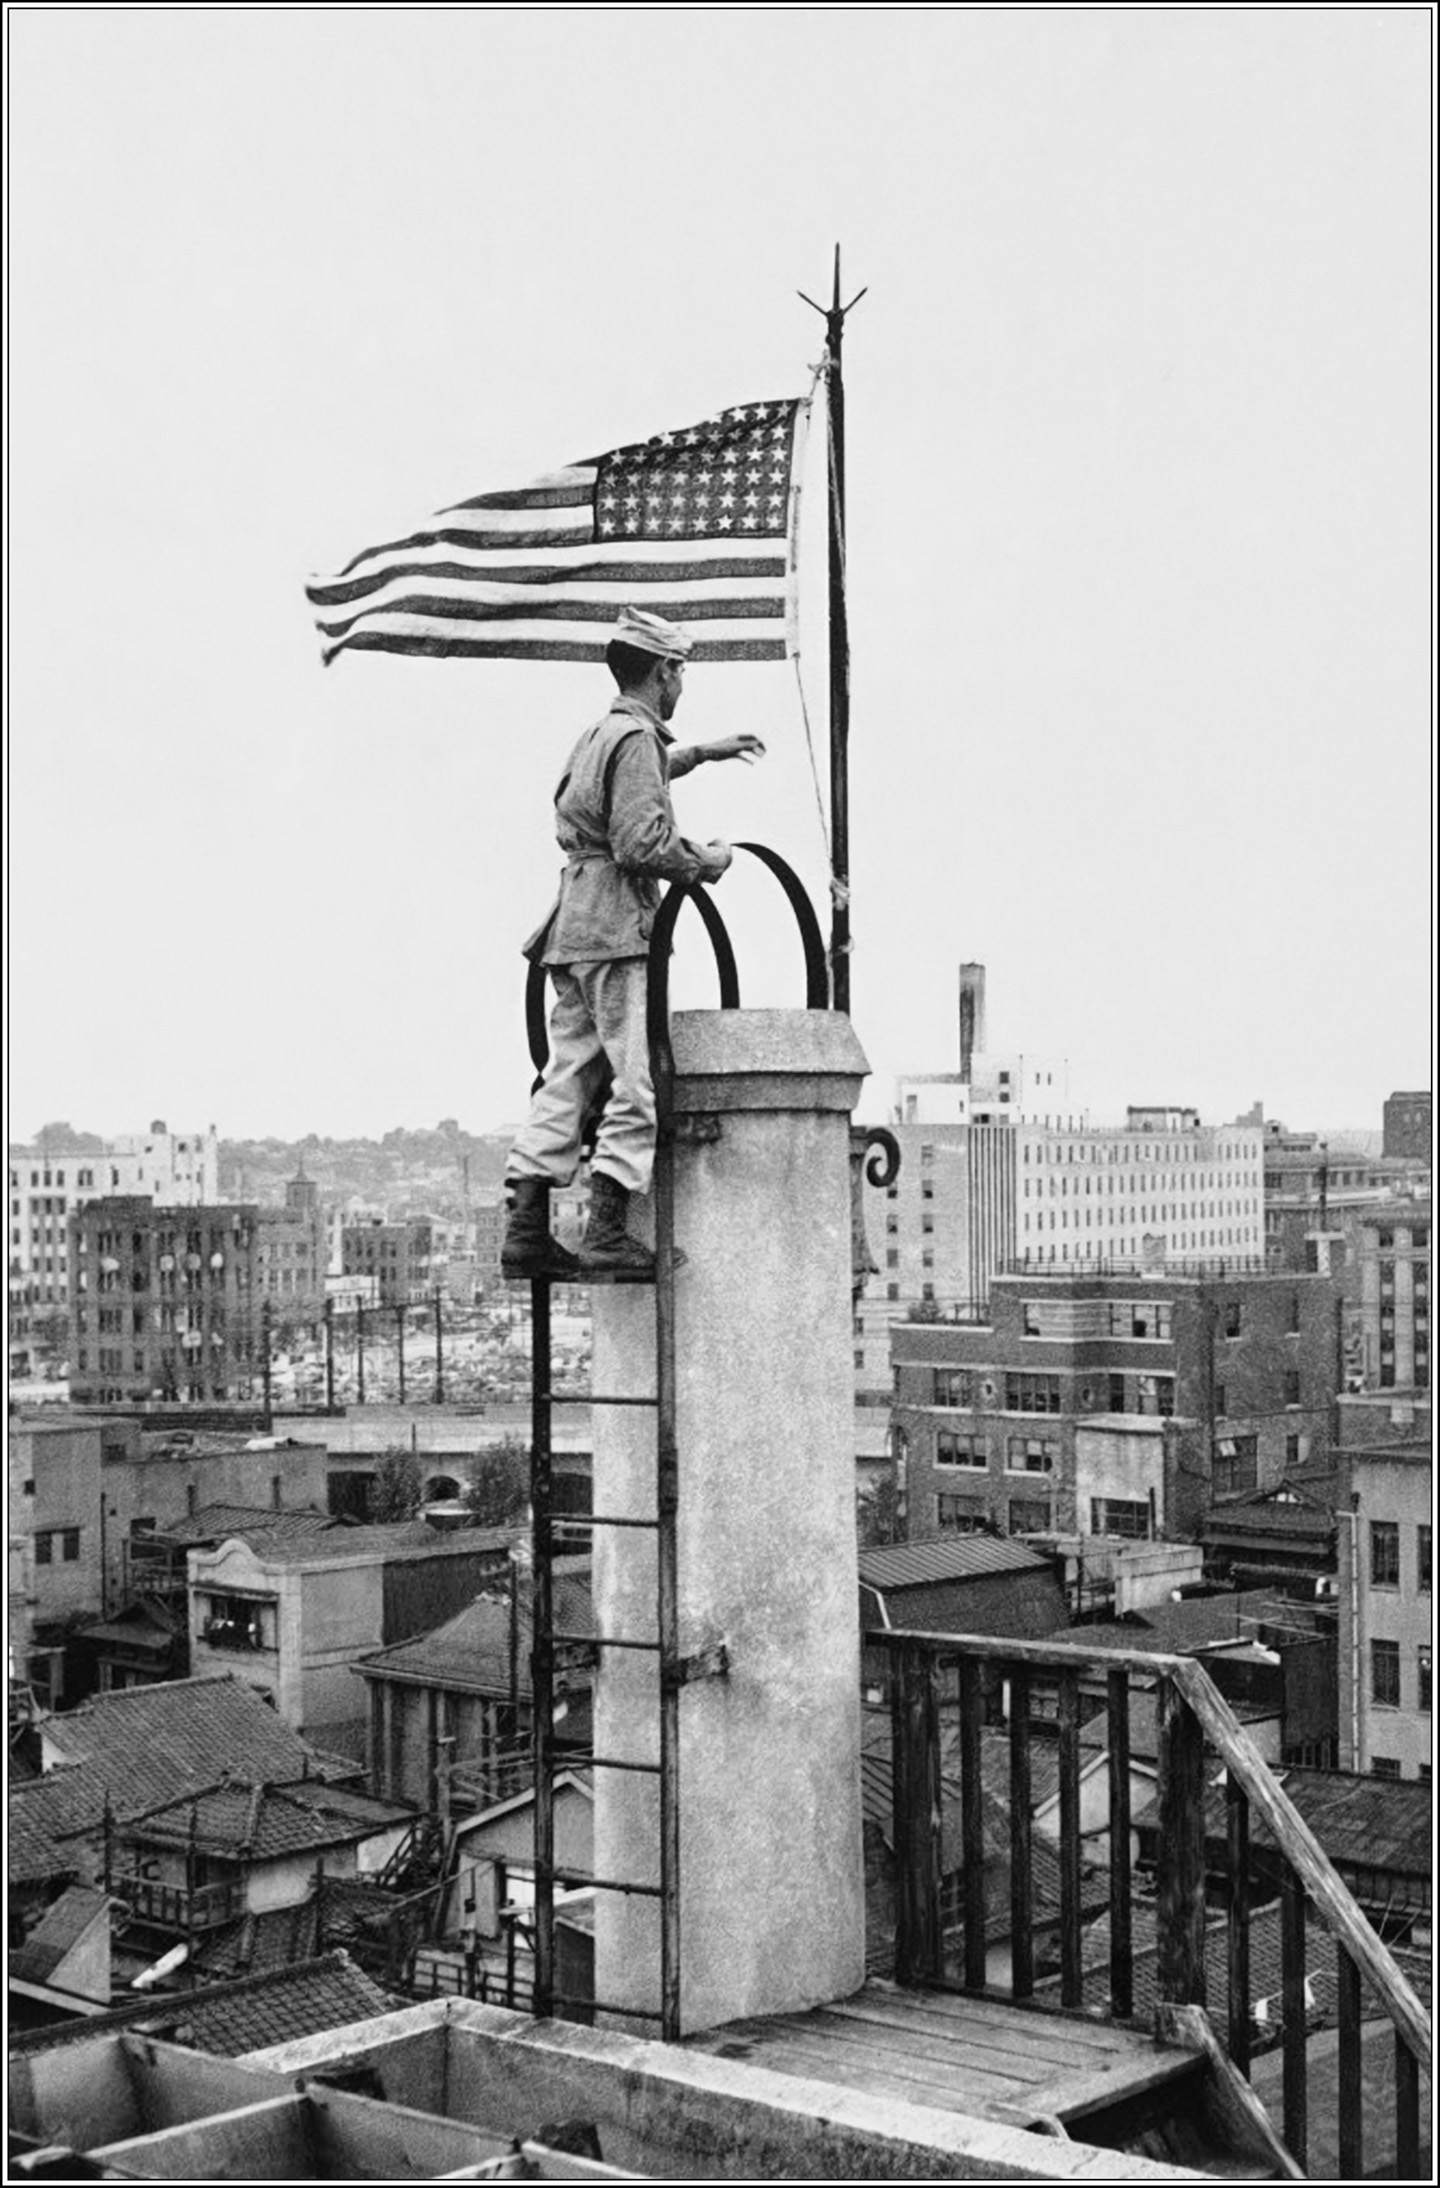 The Angels’ Lieutenant Bernard J. ‘Bud’ Stapleton raises the American flag atop the Nippon News building in Tokyo on September 5, 1945